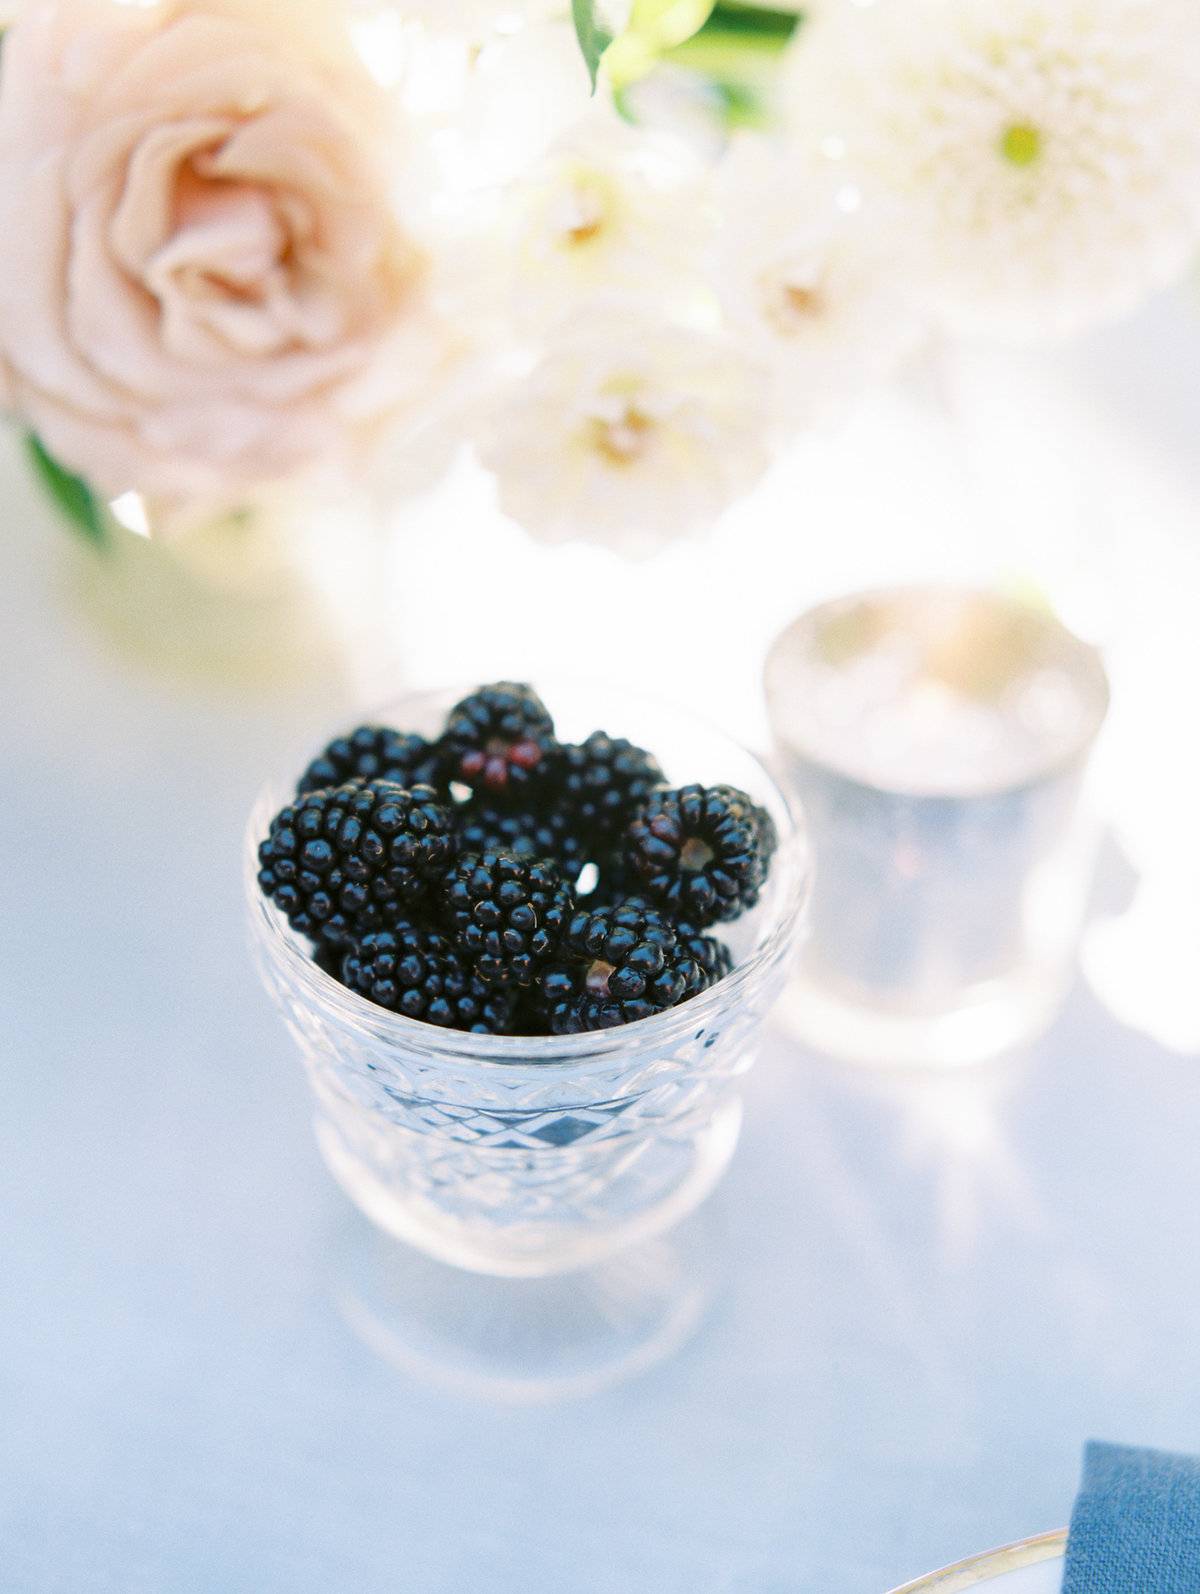 blackberries on the wedding reception table